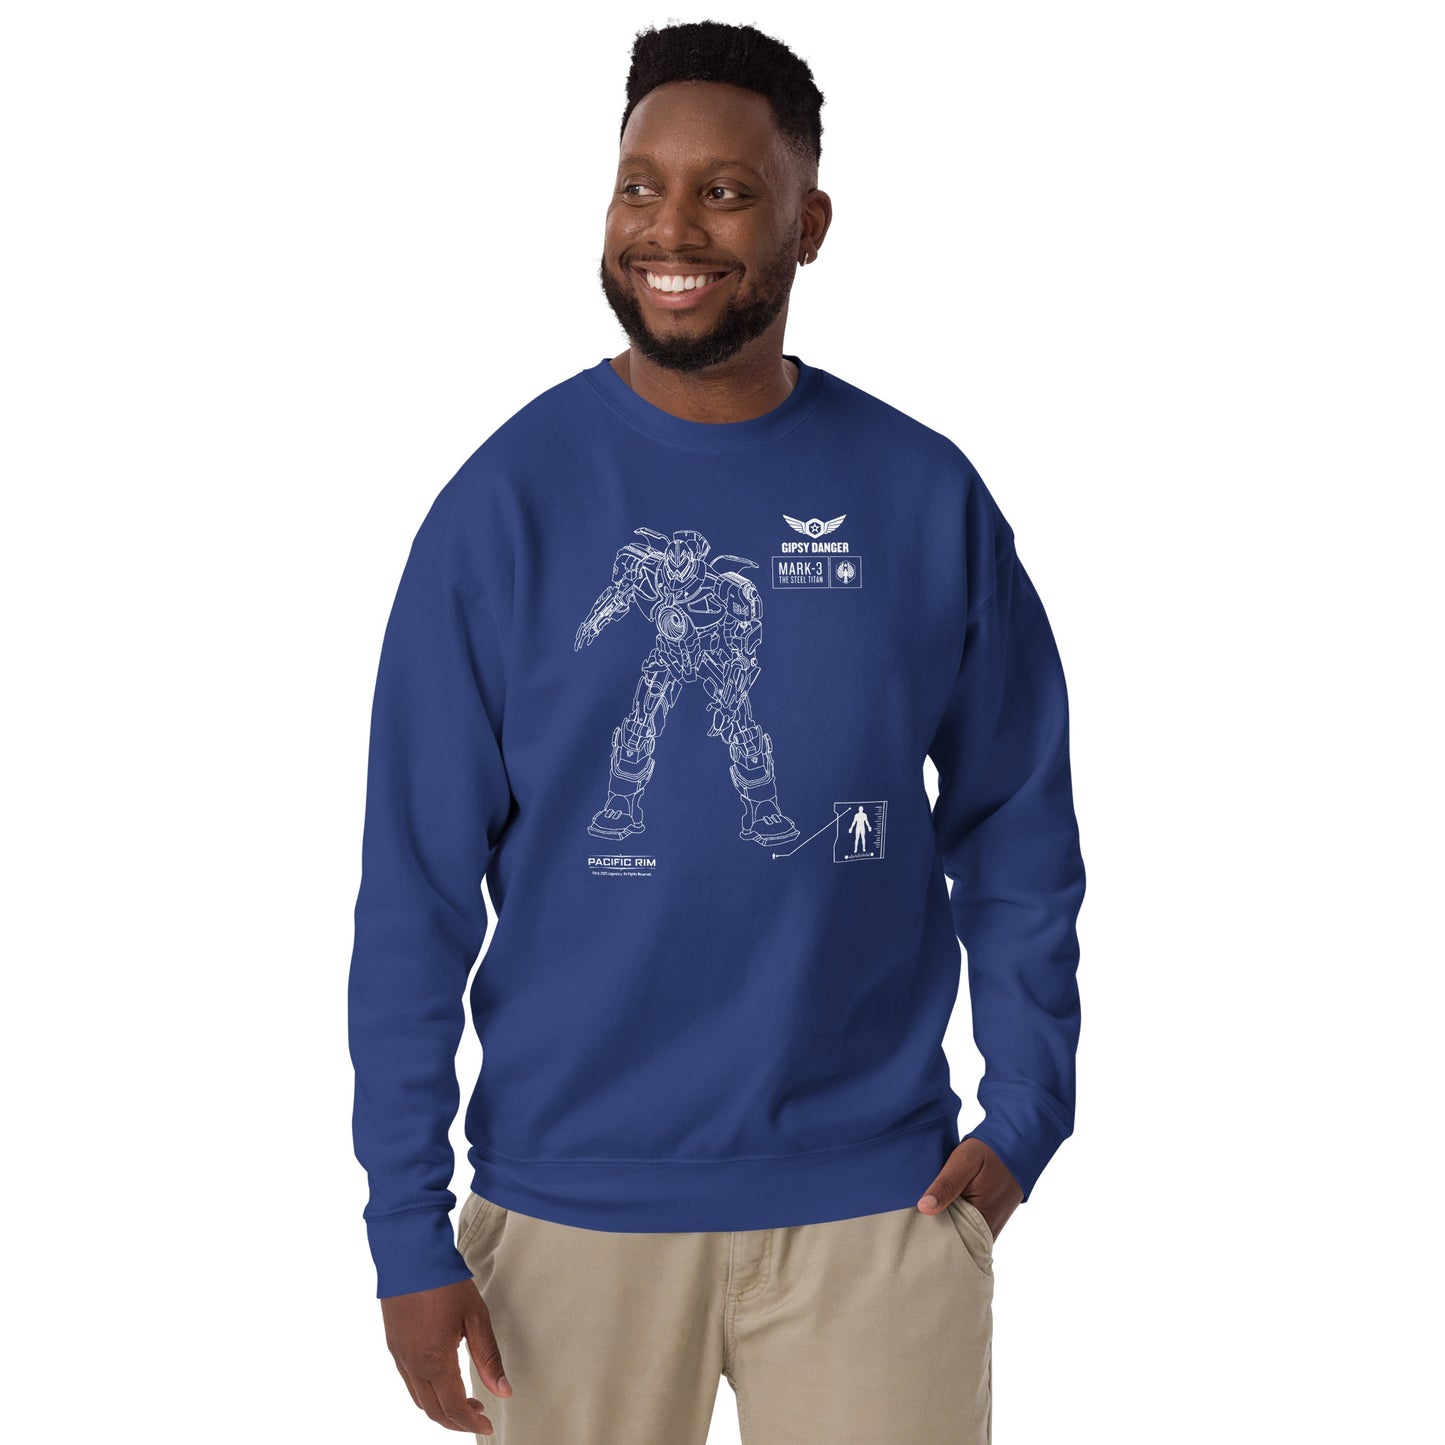 Pacific Rim Gipsy Danger Adult Sweatshirt